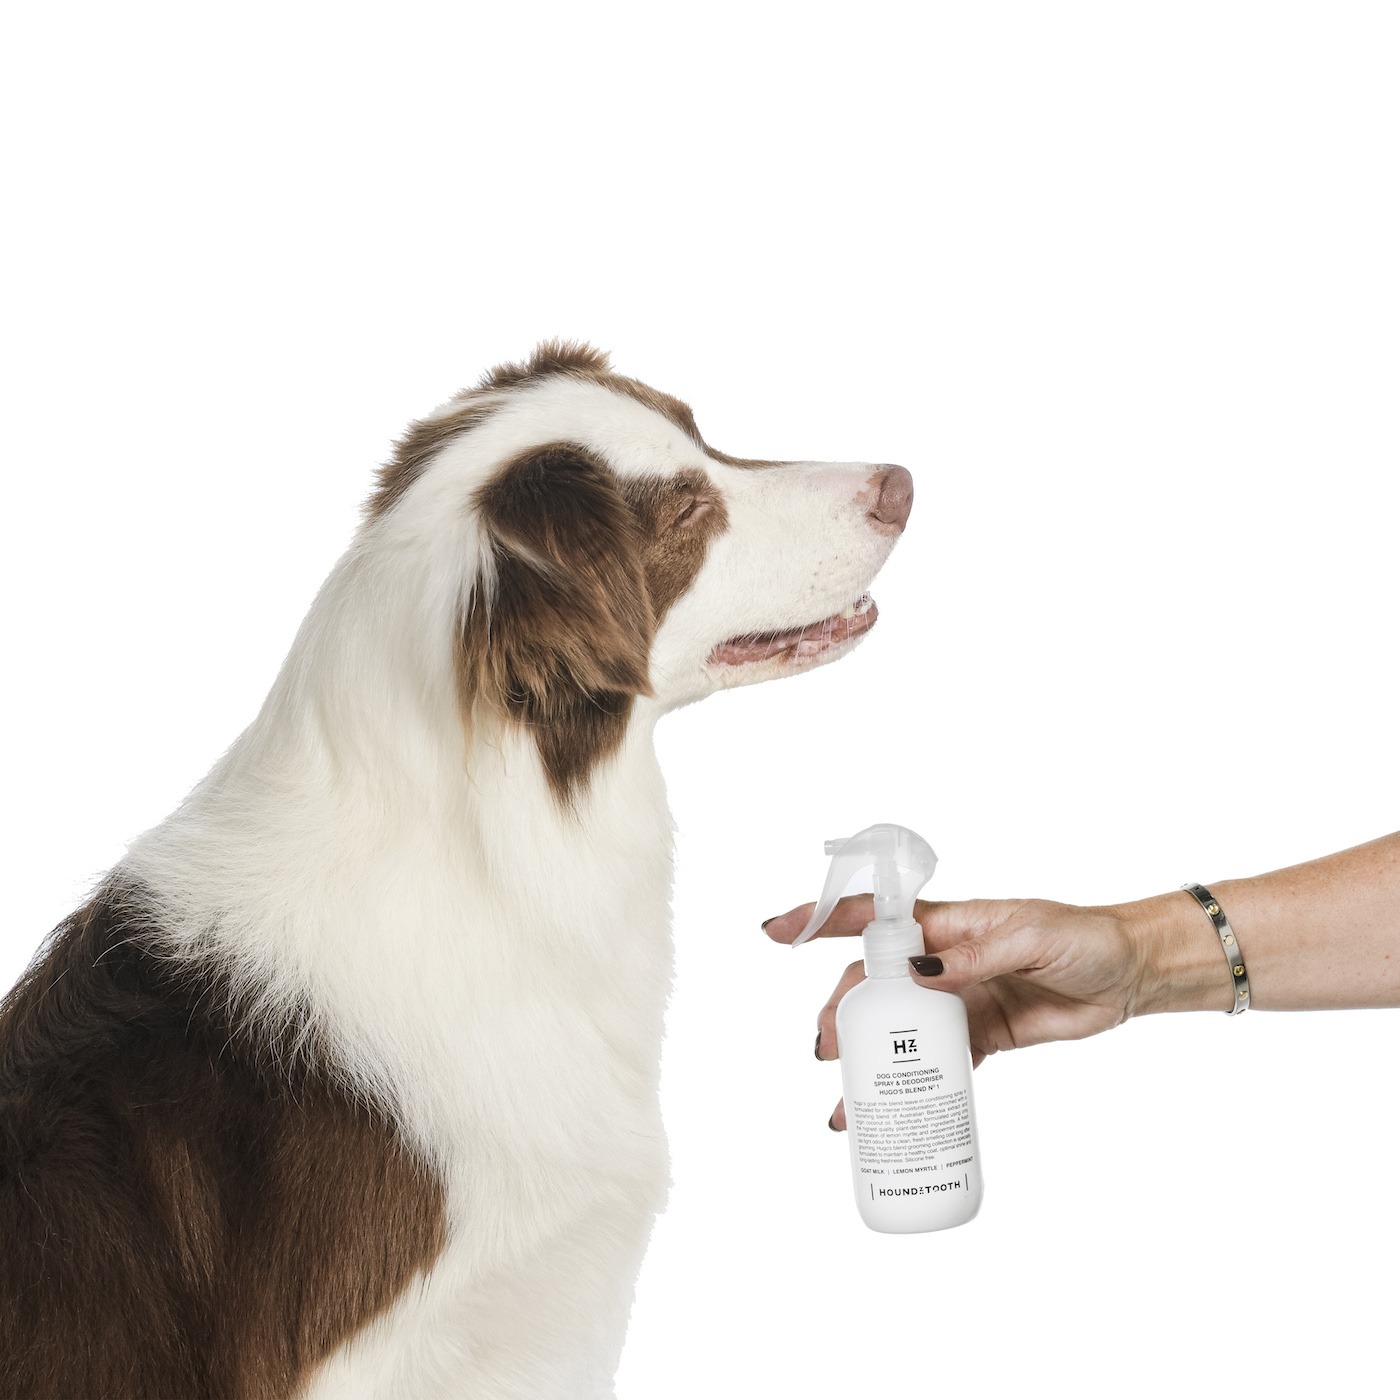 oatmeal shampoo for dogs, dog shampoo for itchy skin, natural dog shampoo, hemp oil for dogs australia,